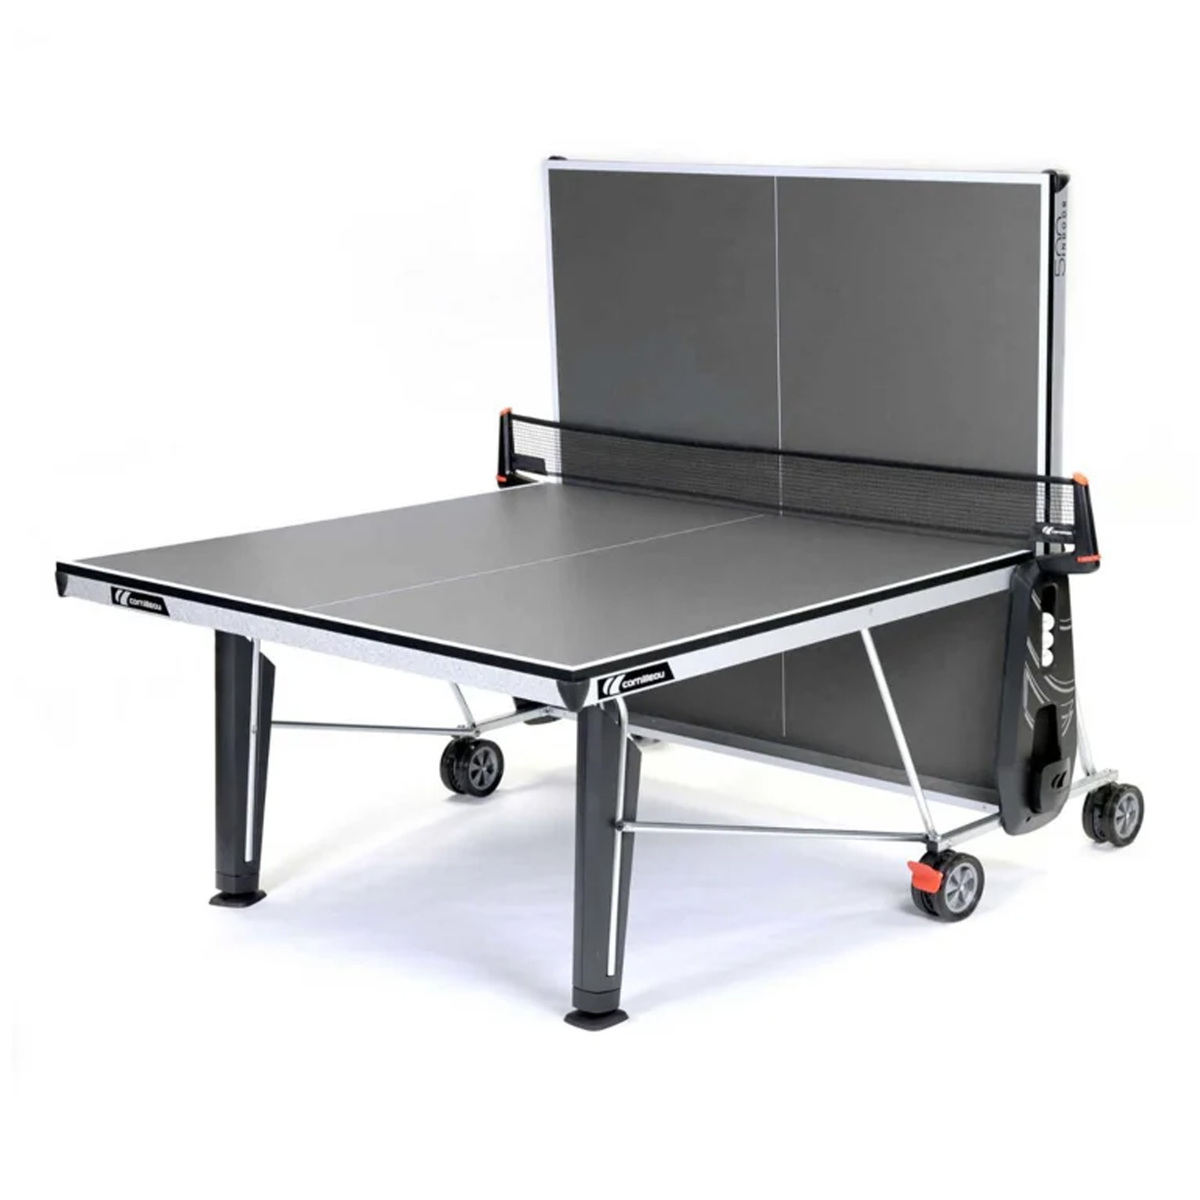 Cornilleau Sport 500 Indoor Table Tennis Table, Grey, 43001